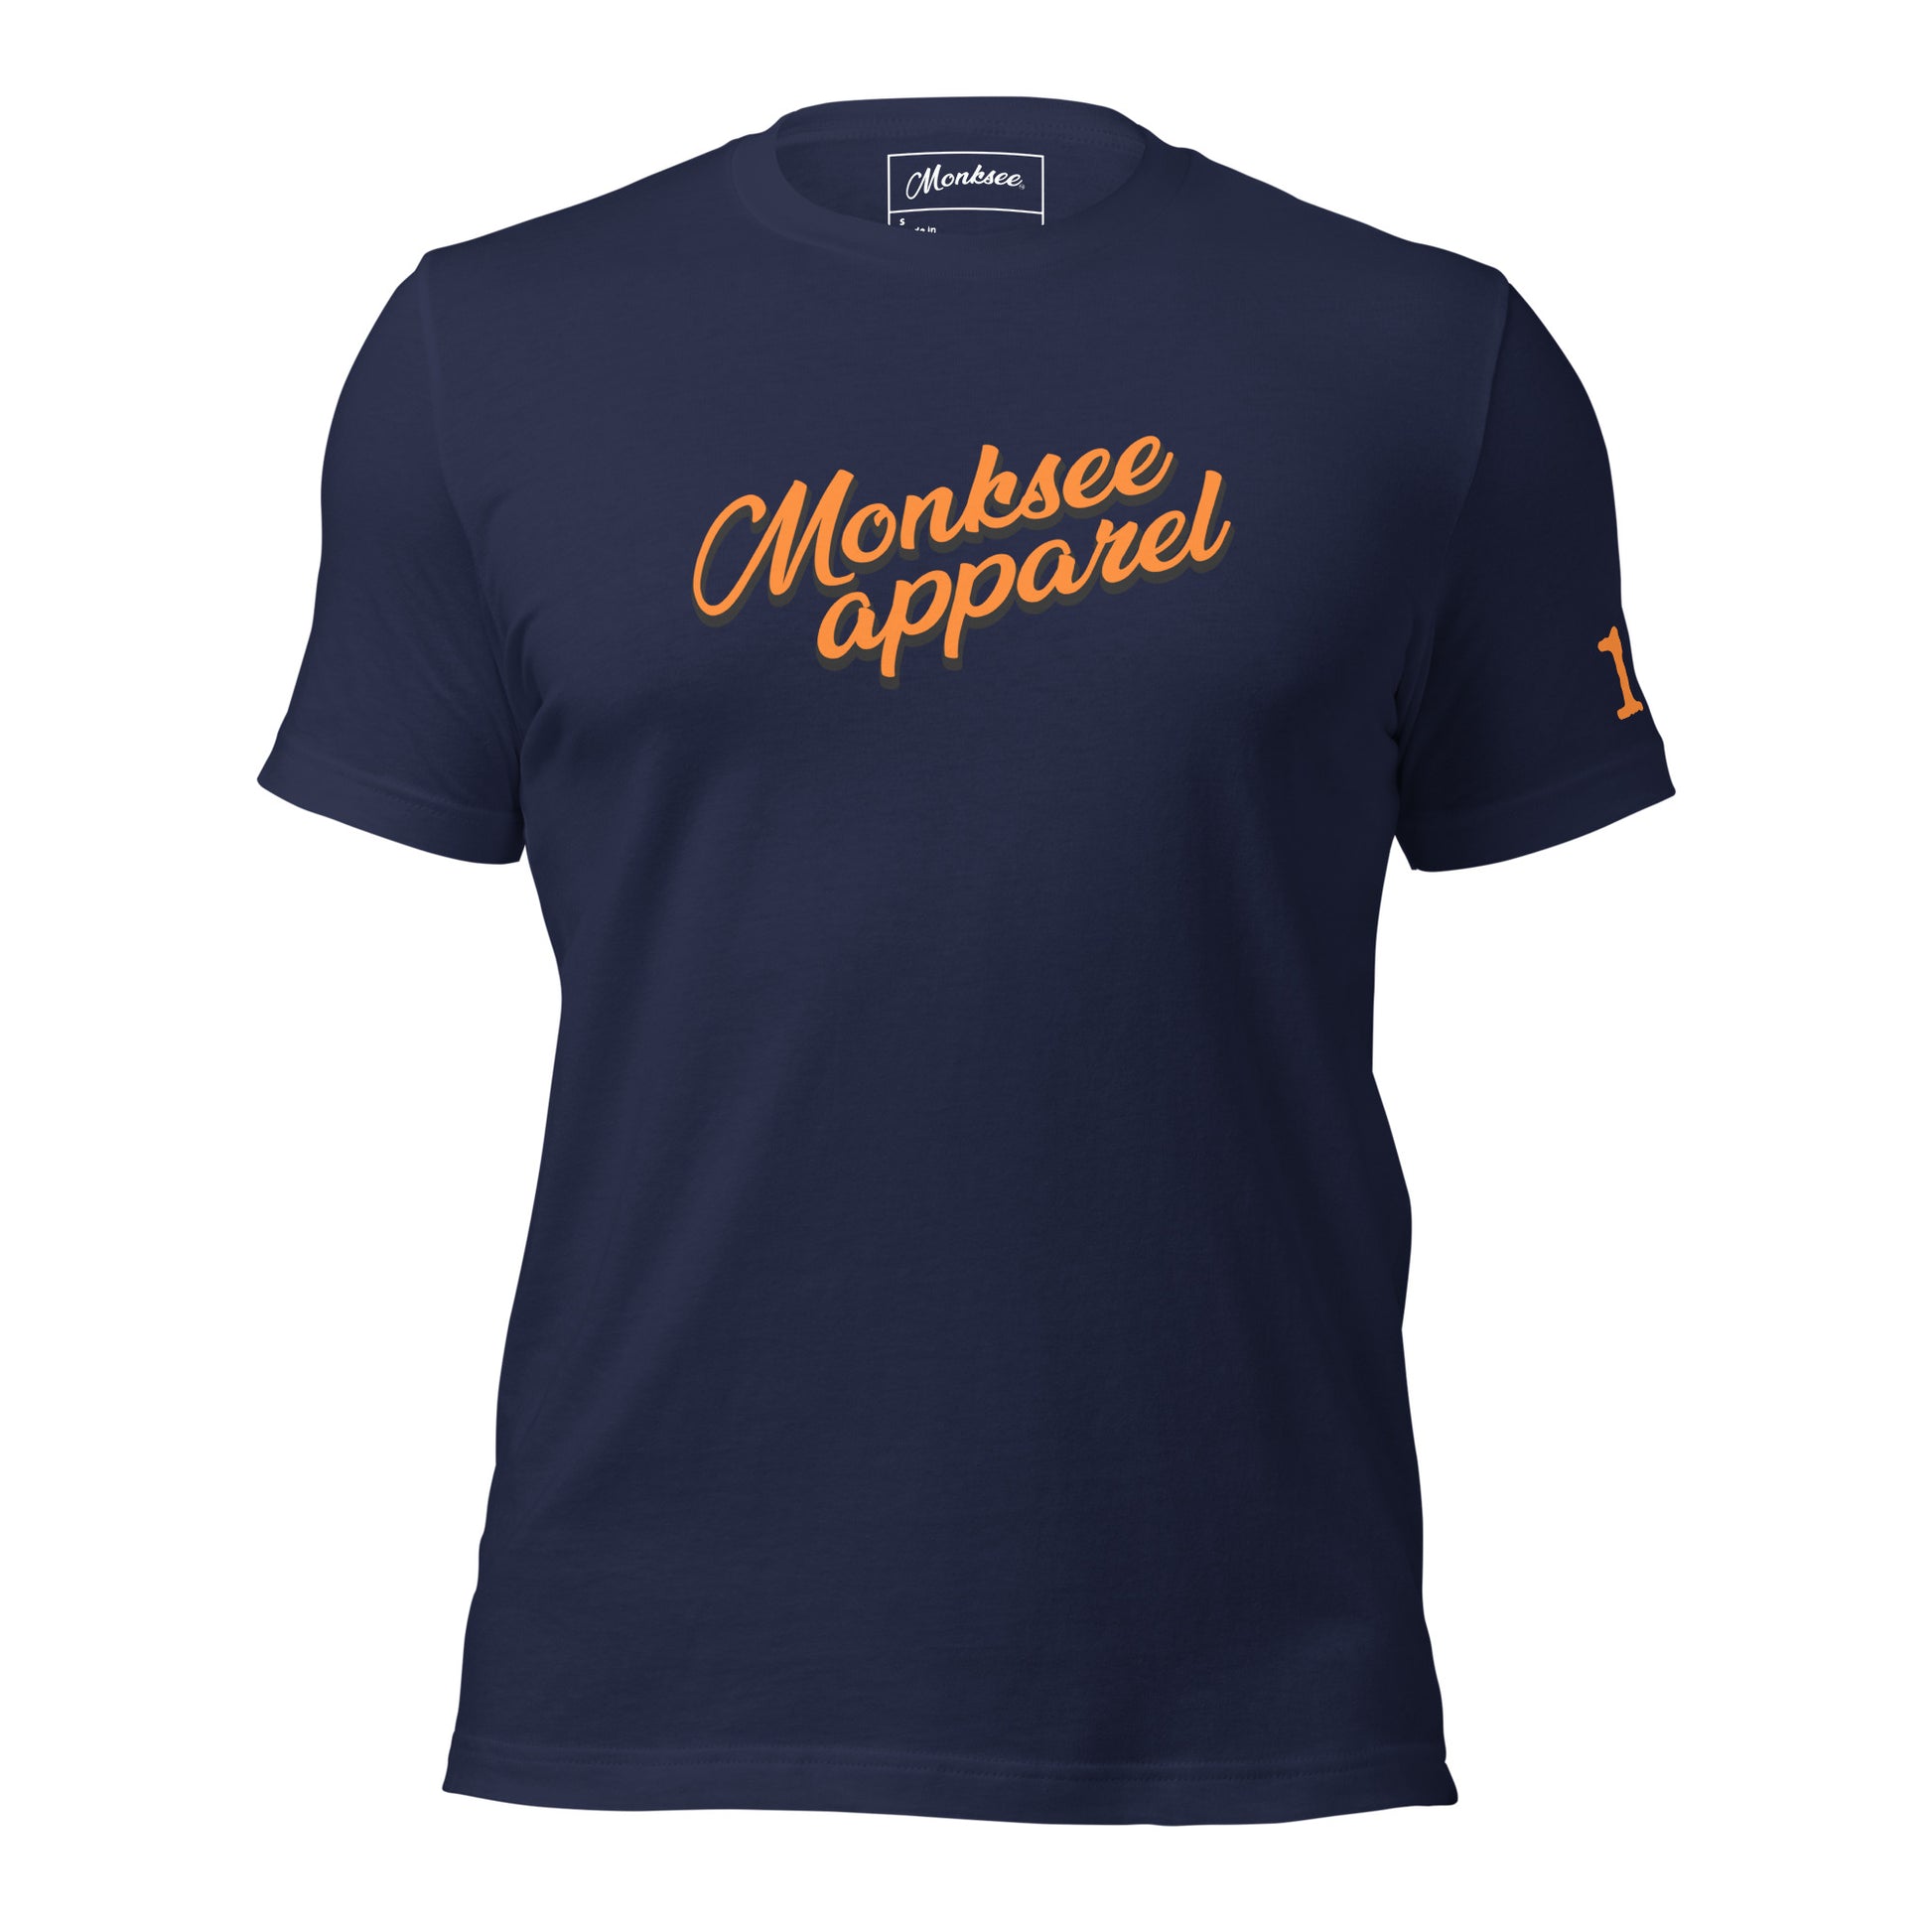 Monksee Apparel t-shirt.